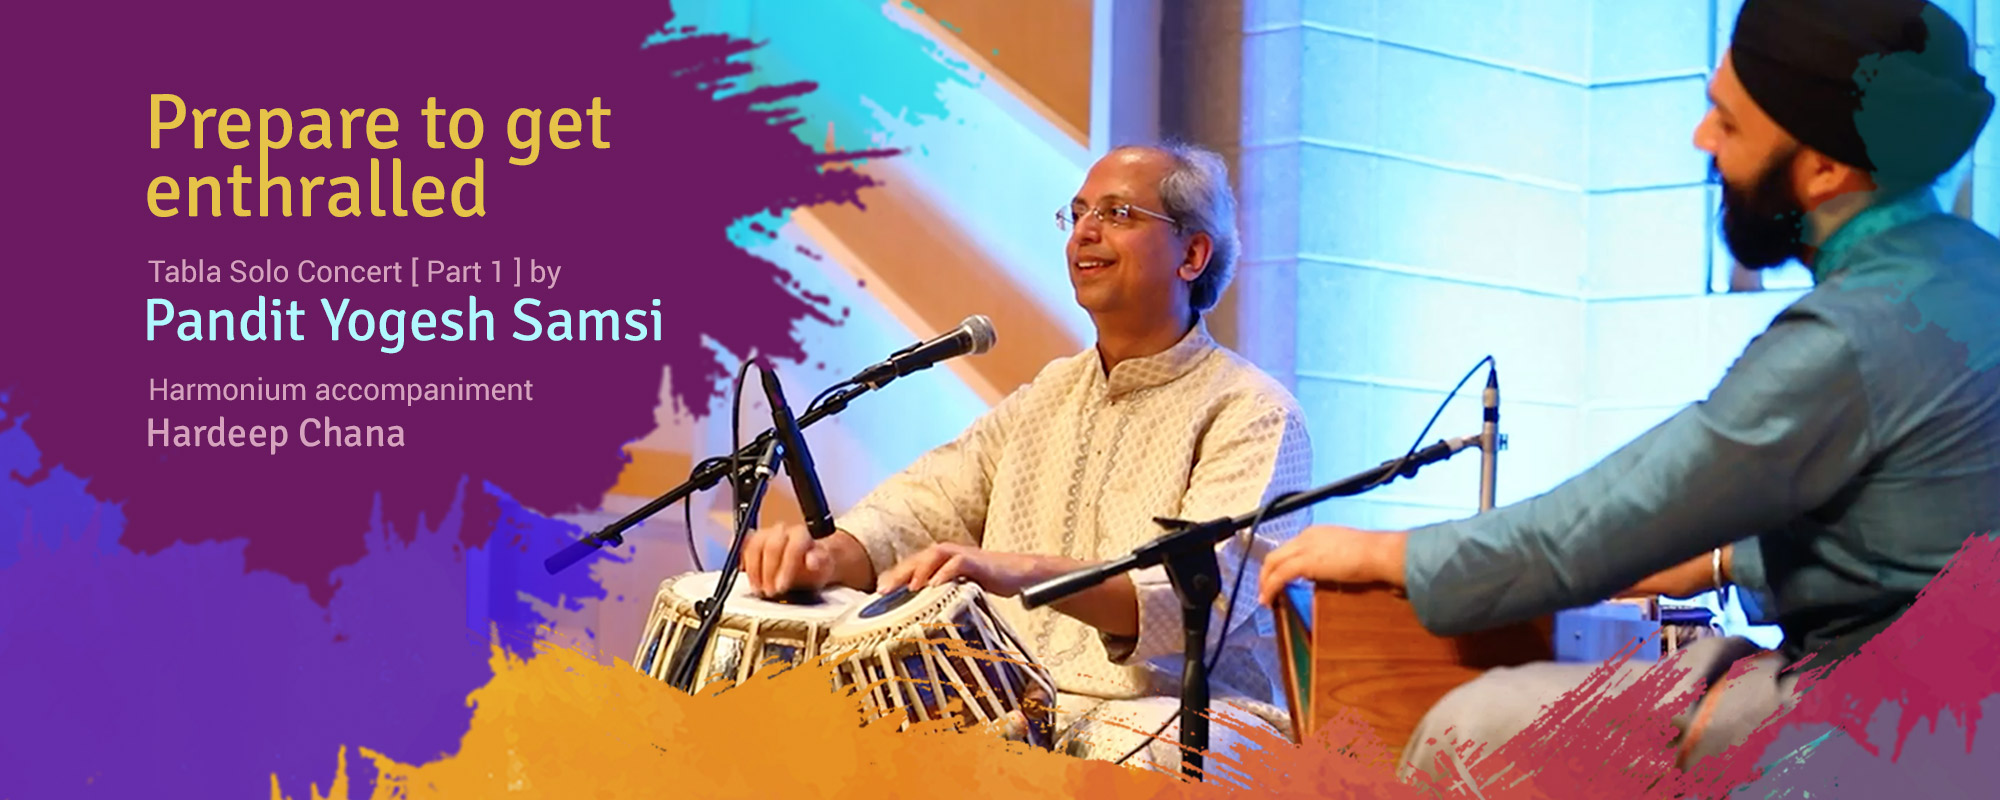 Pandit yogesh samsi tabla concert part1